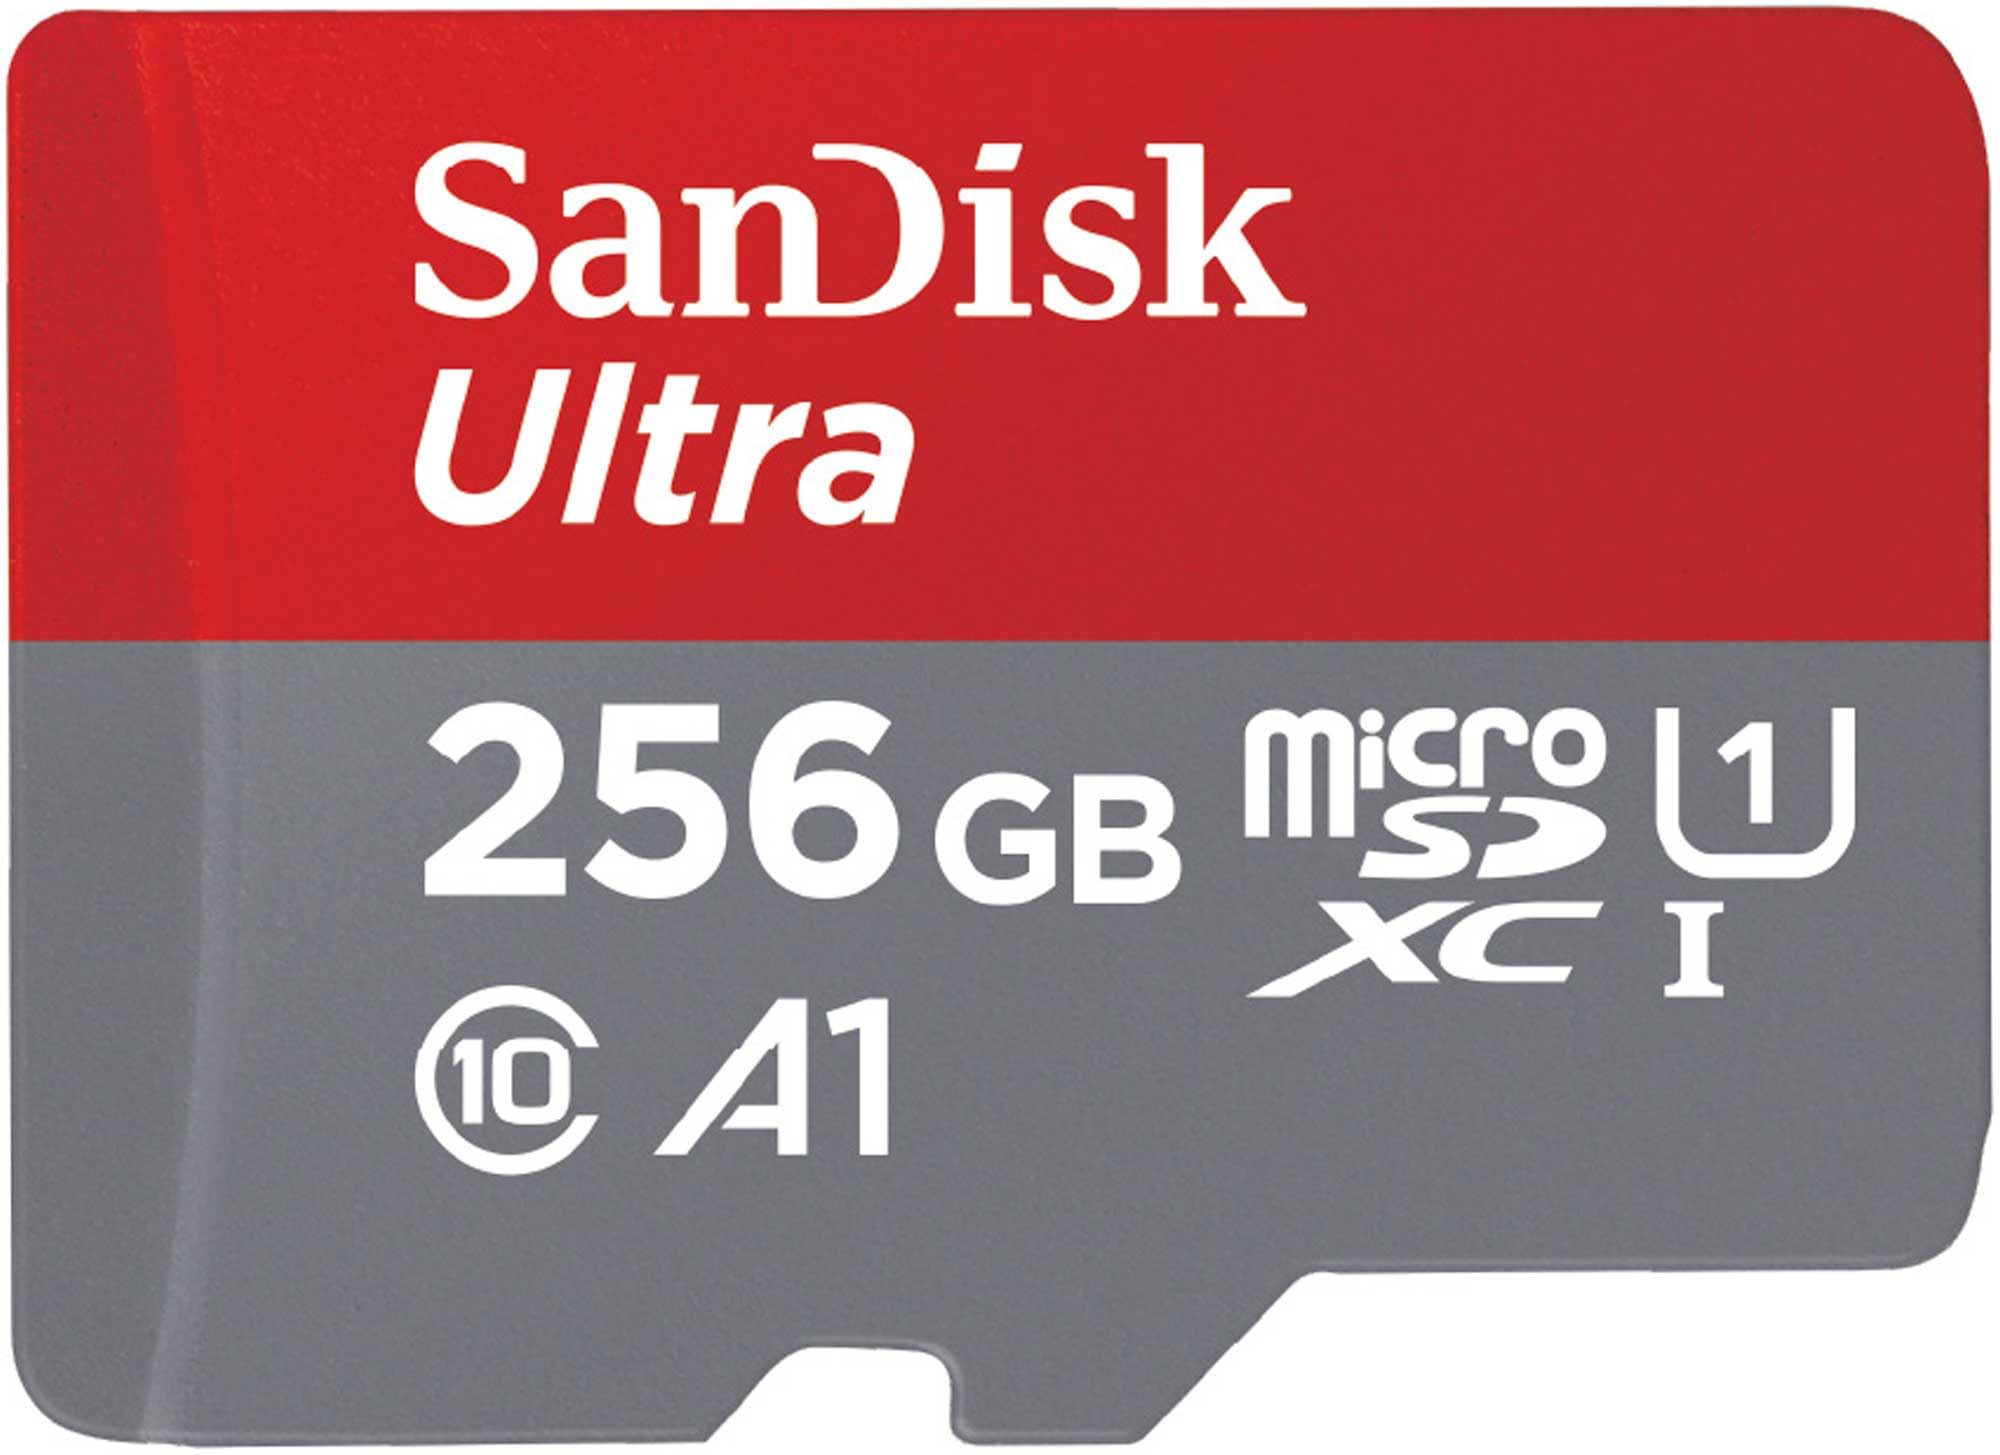 SanDisk サンディスク 正規品 microSDカード 256GB UHS-I Class10 10年間限定保証 SanDisk Ultra SDSQUAC-256G-GH3MA 新パッケージ